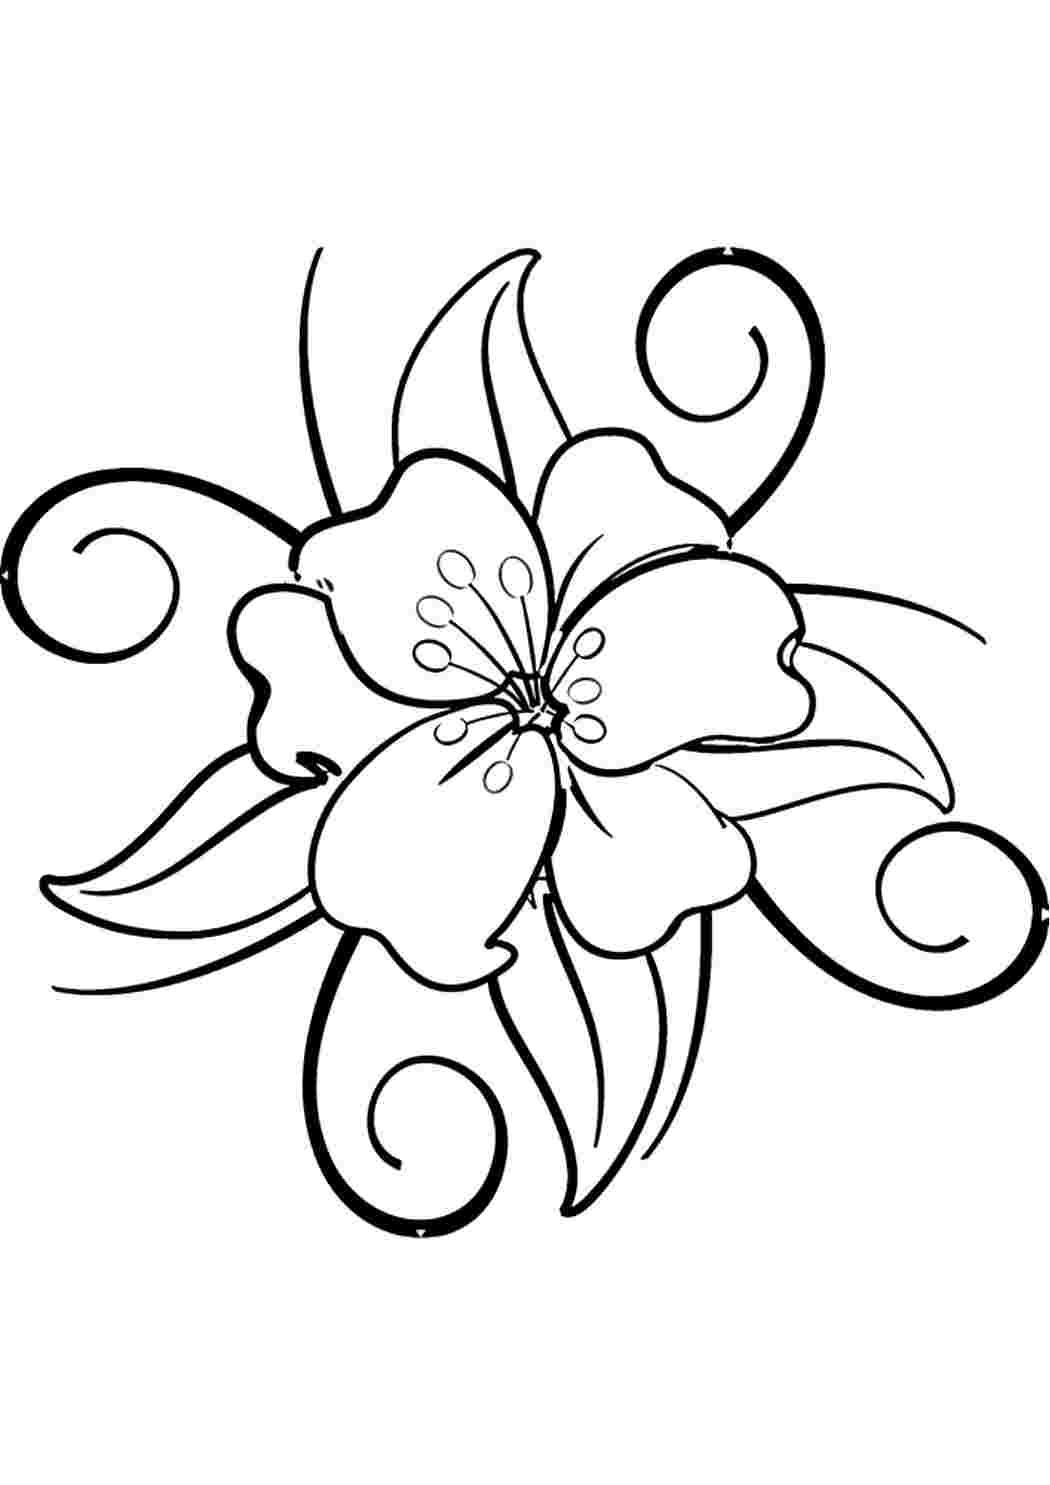 Рисунки карандашом цветы с завитушками